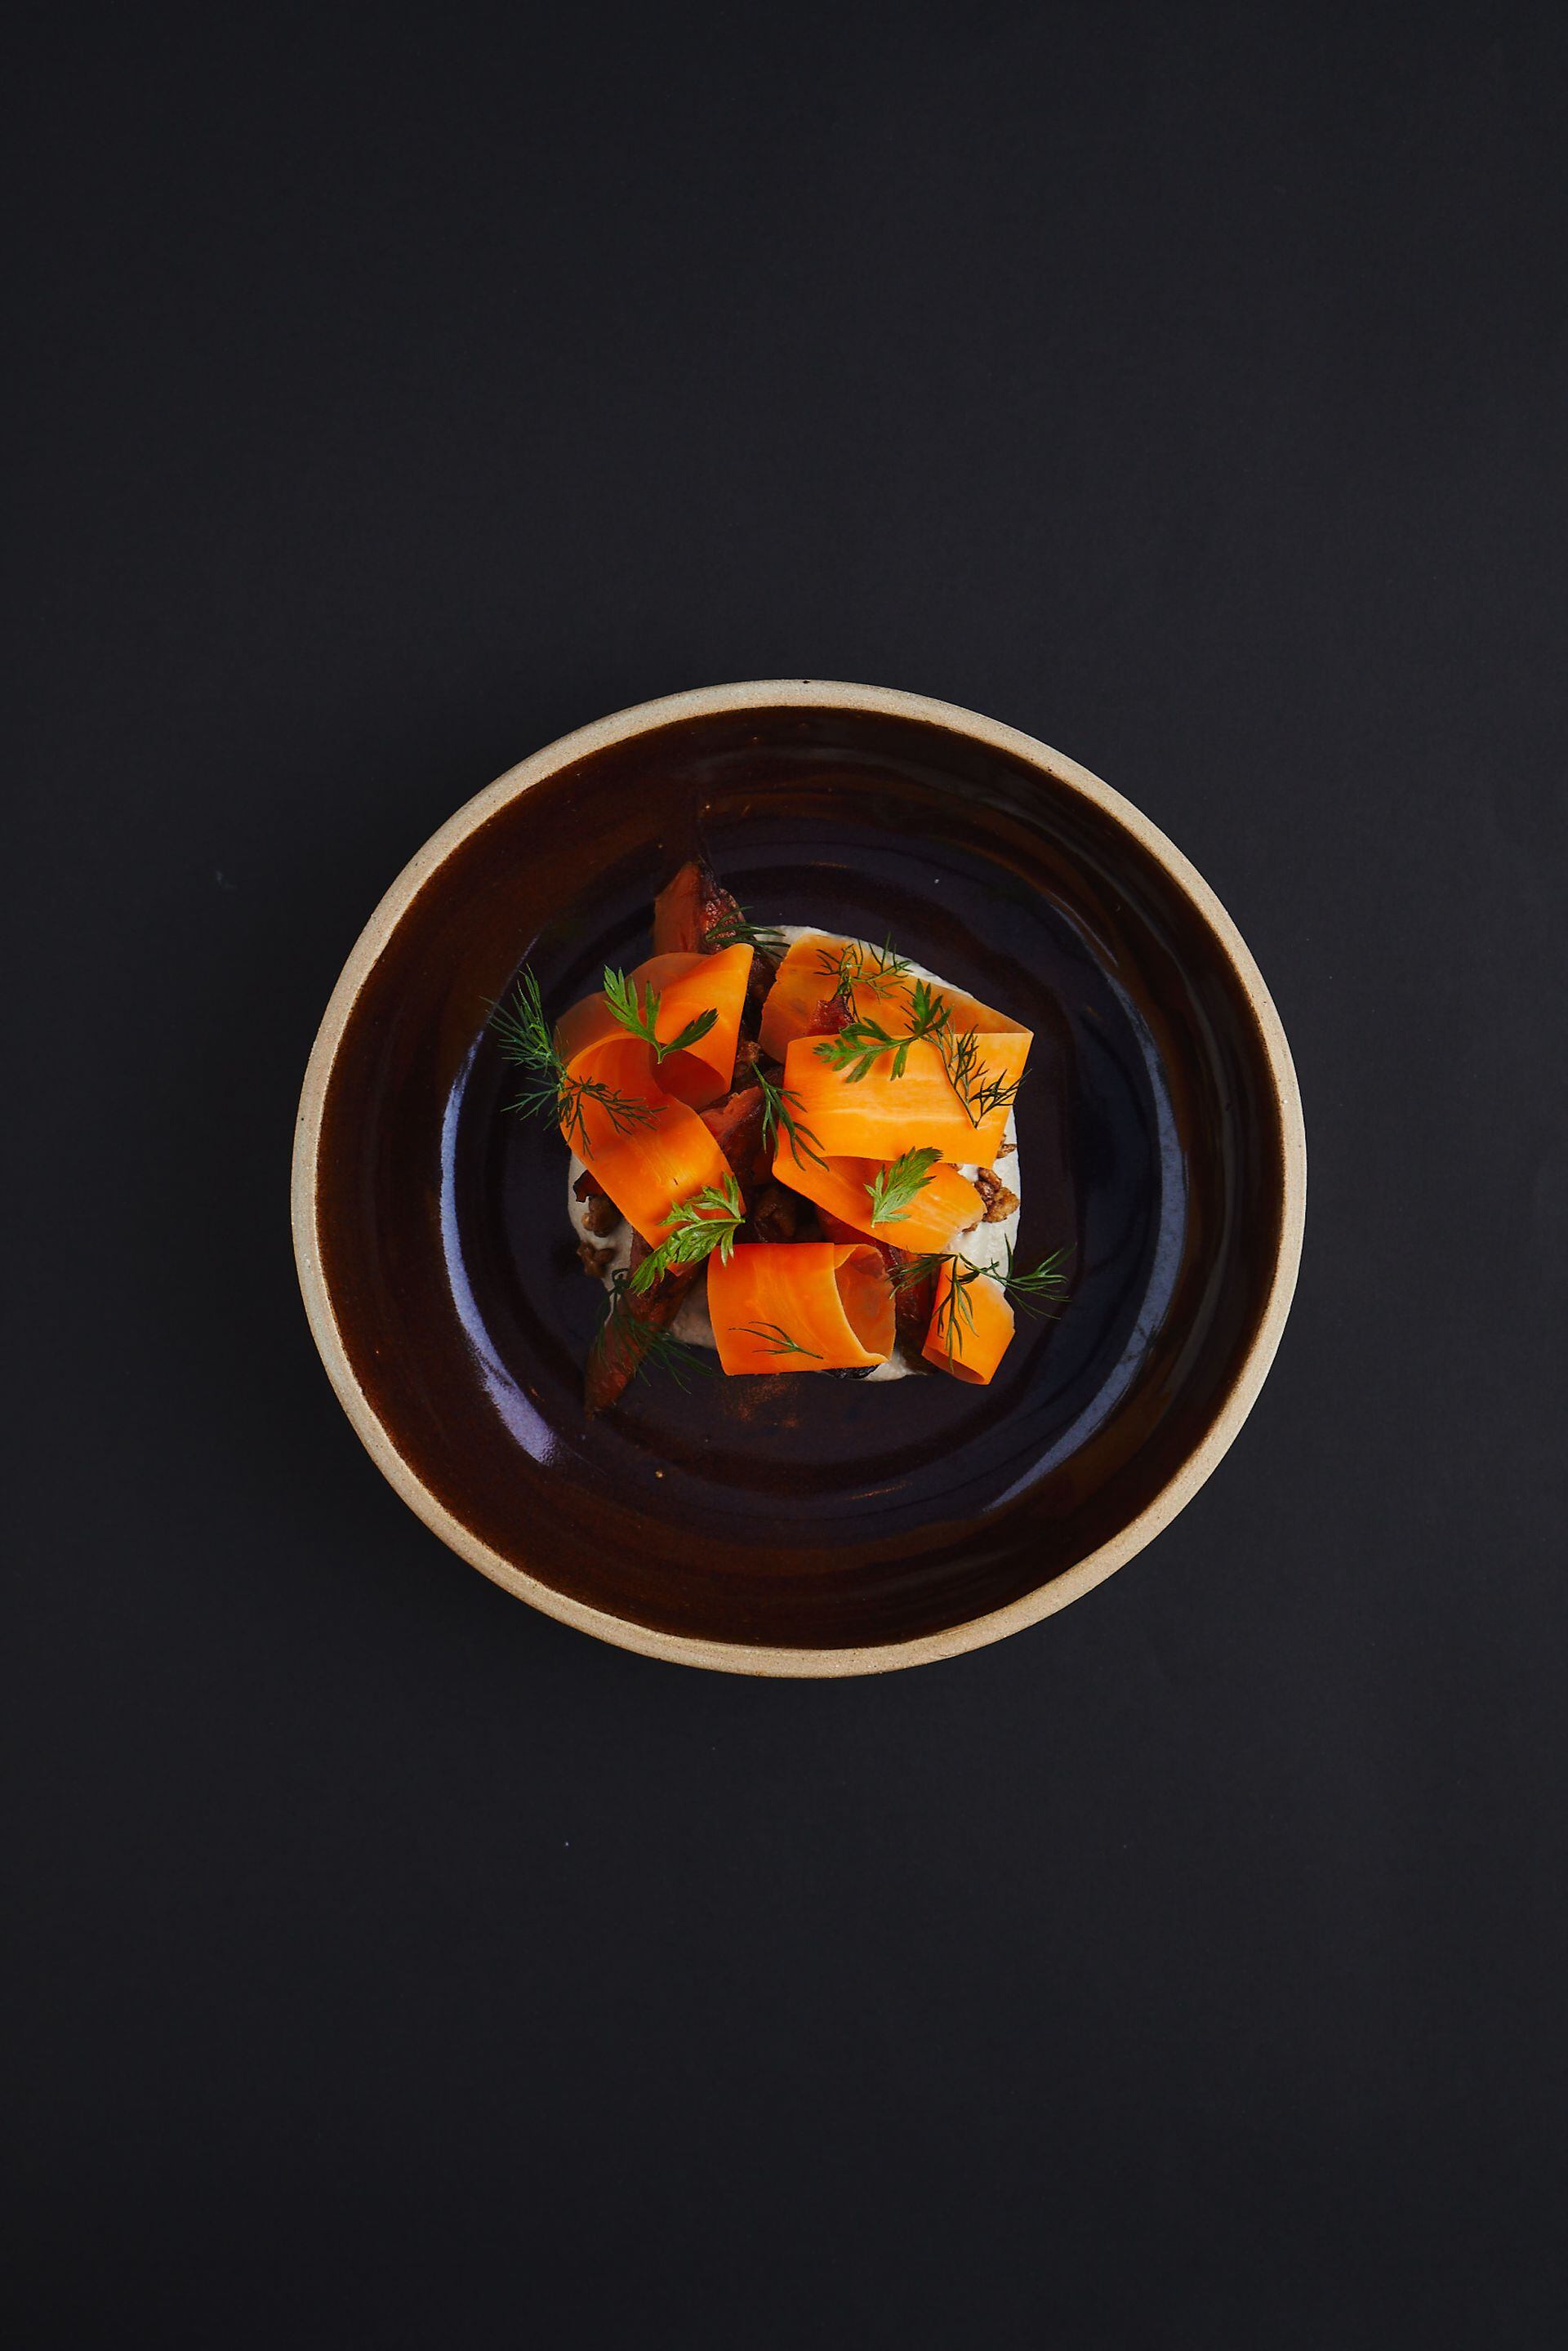 Zanahorias confitadas, puré de girasol, zanahorias fermentadas y eneldo, otro de los platos de Gioia.